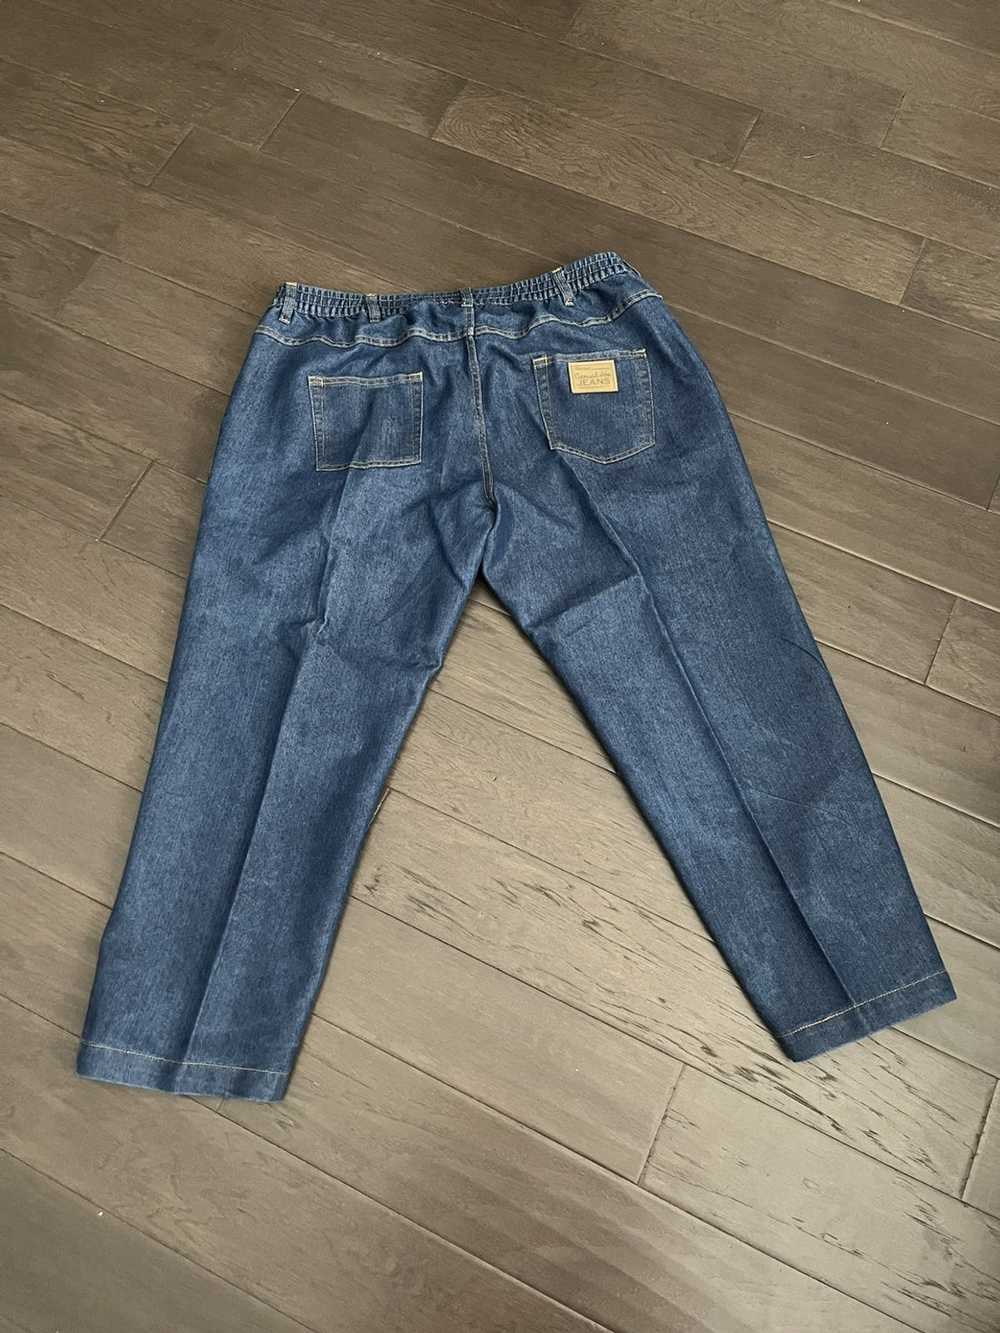 Haband × Vintage Vintage Haband Casual Joe Jeans - image 3